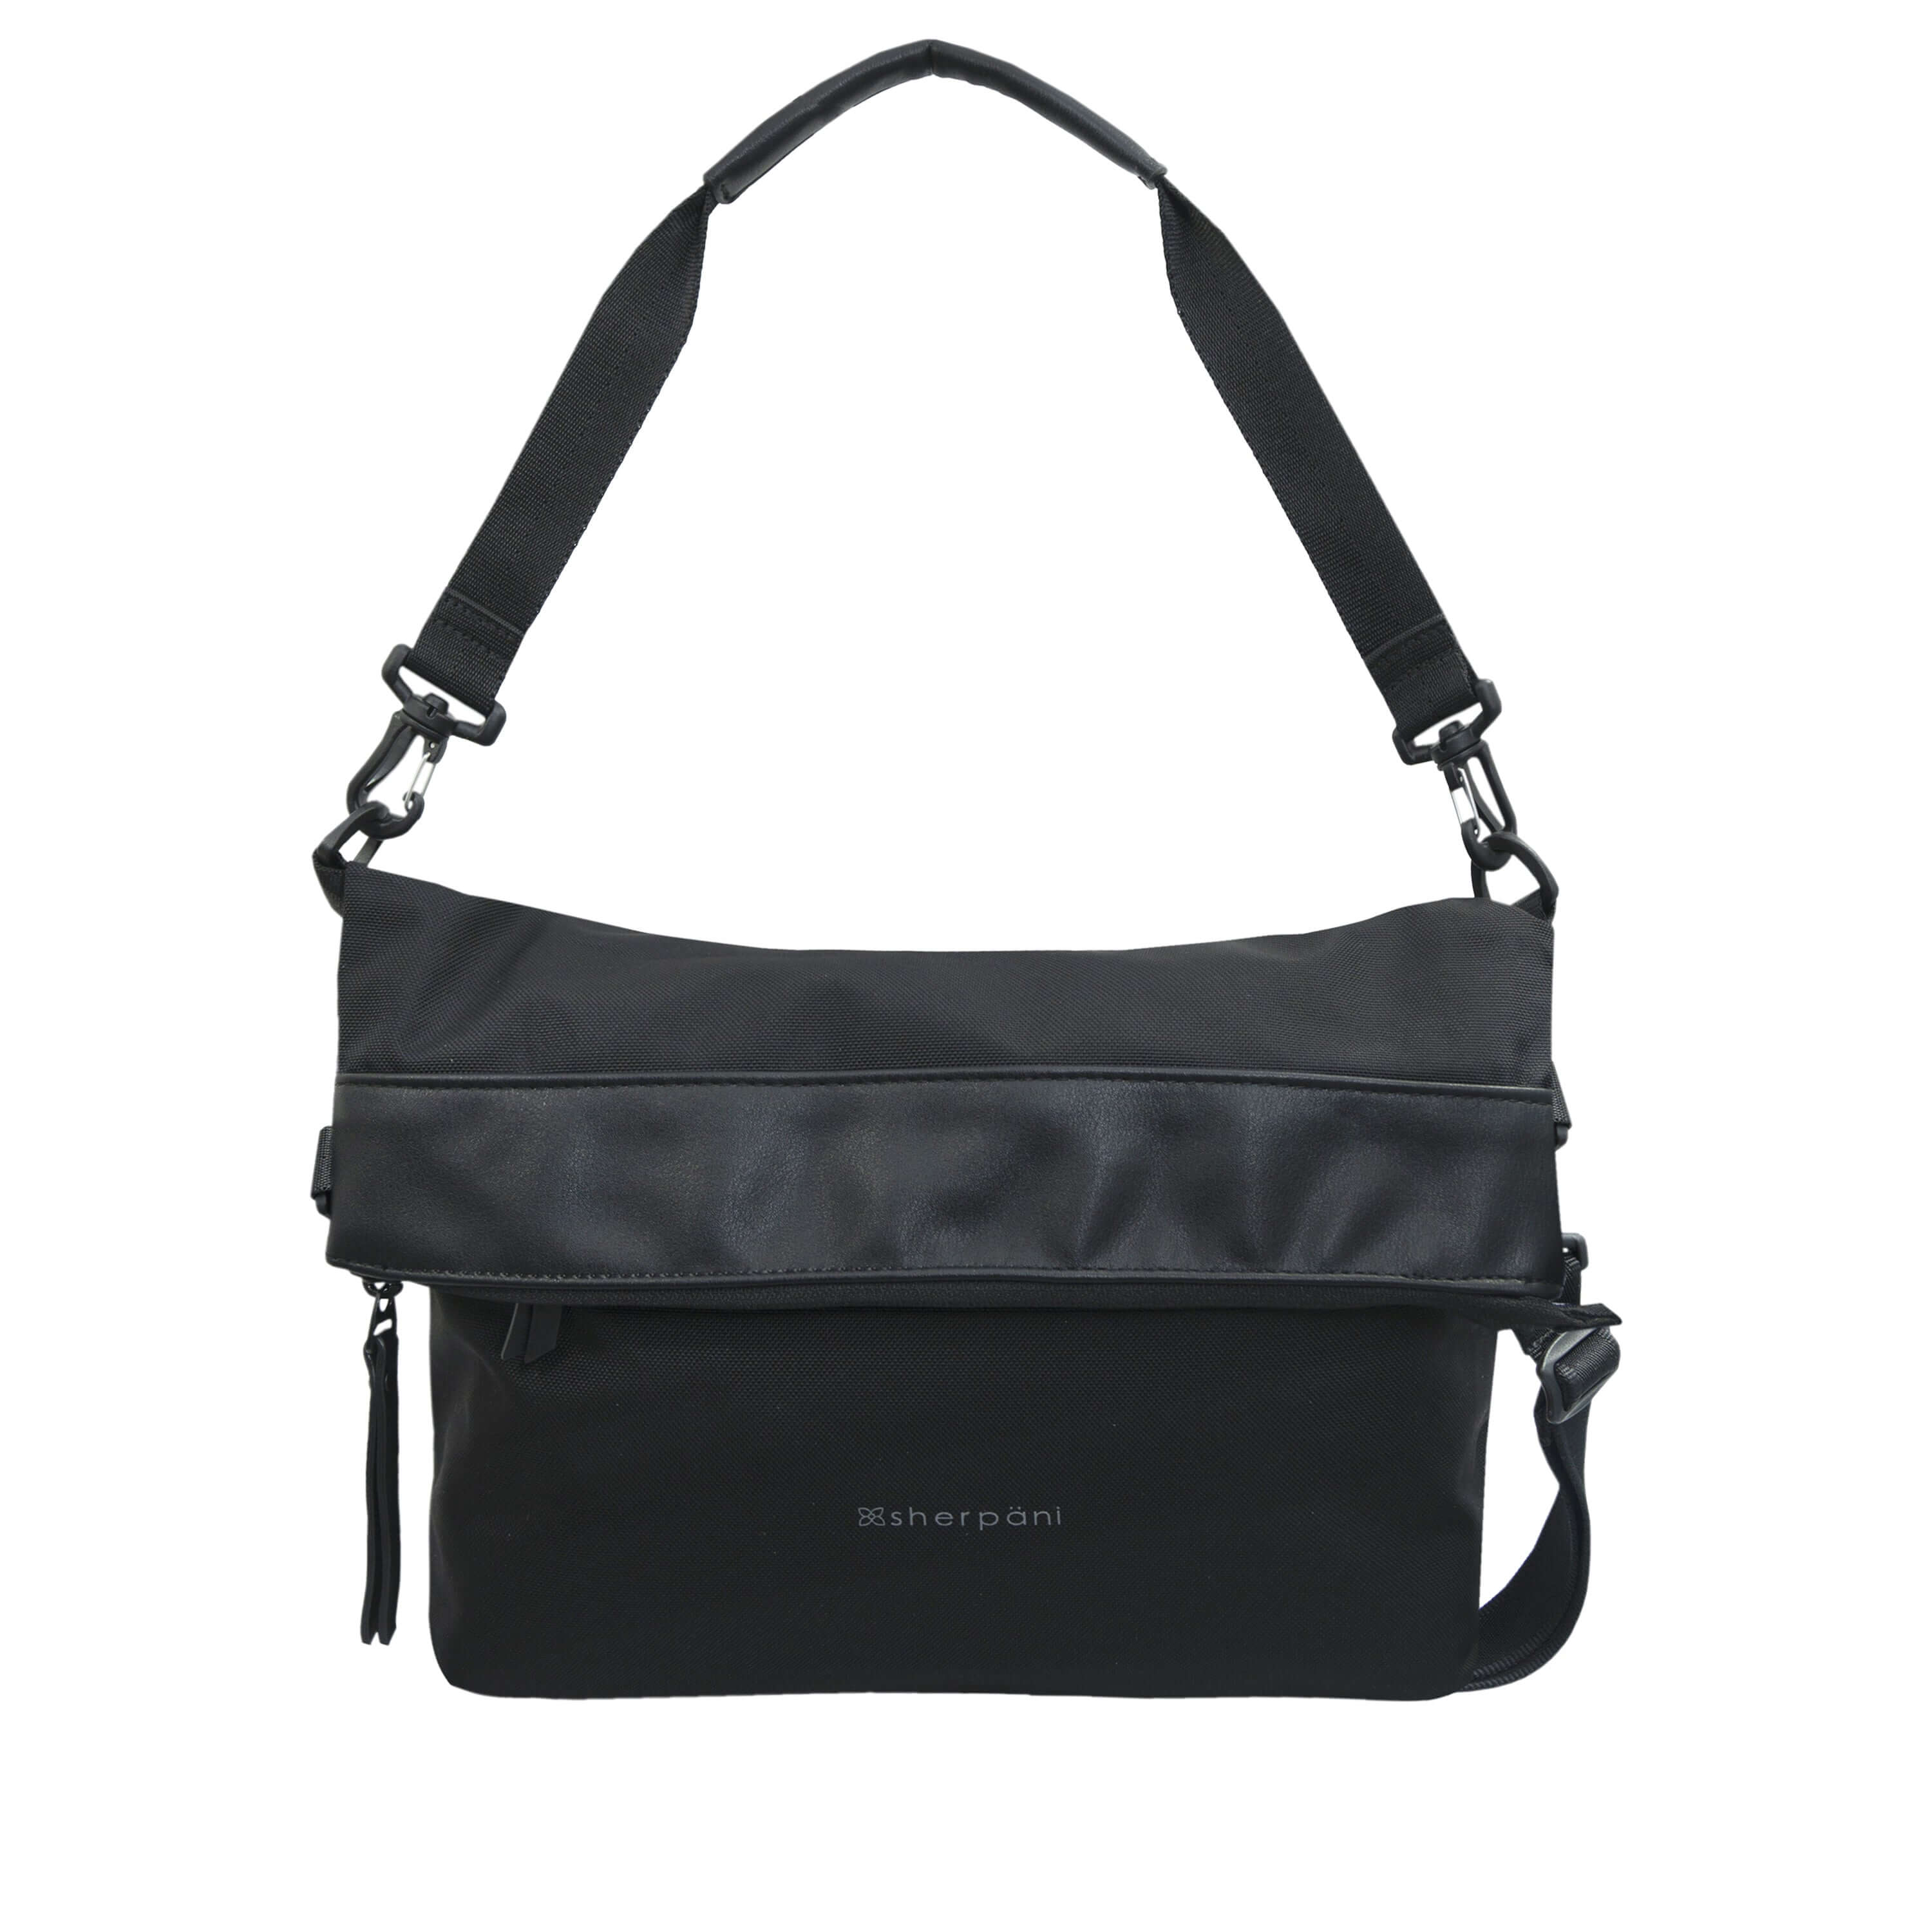 Unique Womens Crossbody Bag with Top Handle Black Leather Shoulder Bag, Black